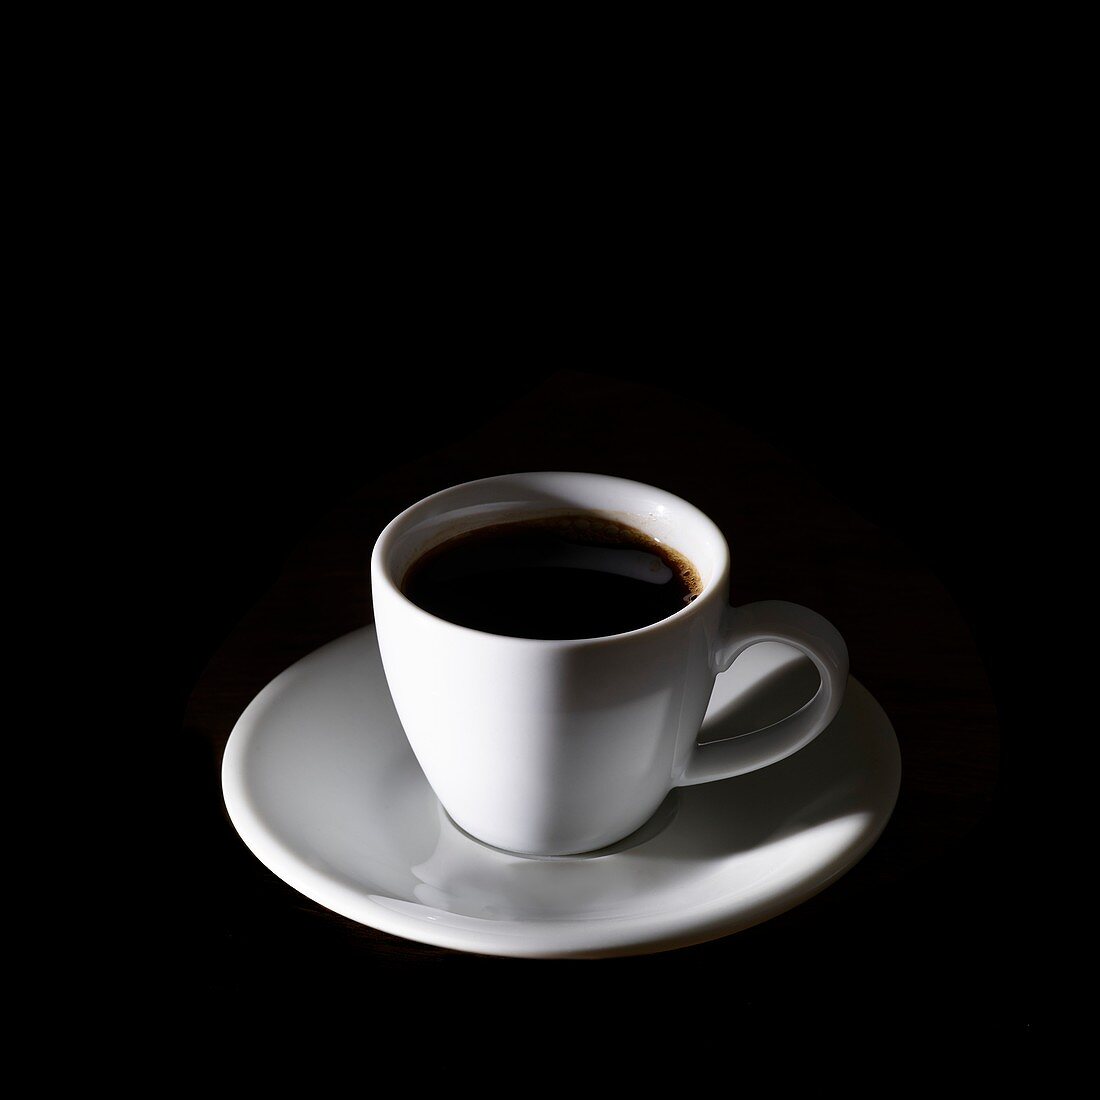 Black coffee in coffee cup